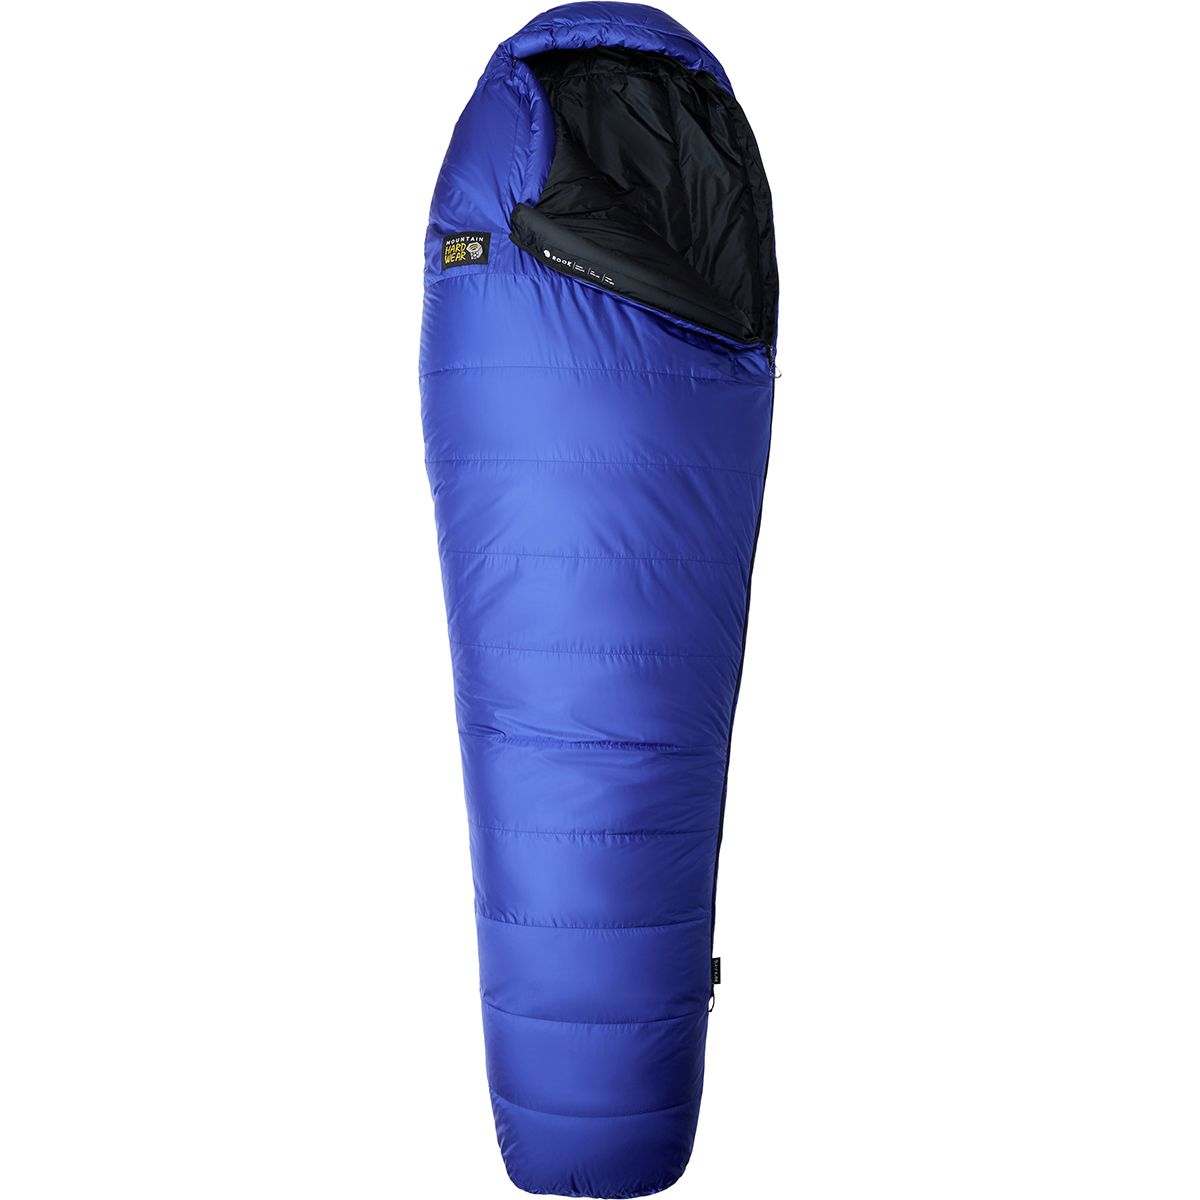 Mountain Hardwear Rook Sleeping Bag: 30F Down